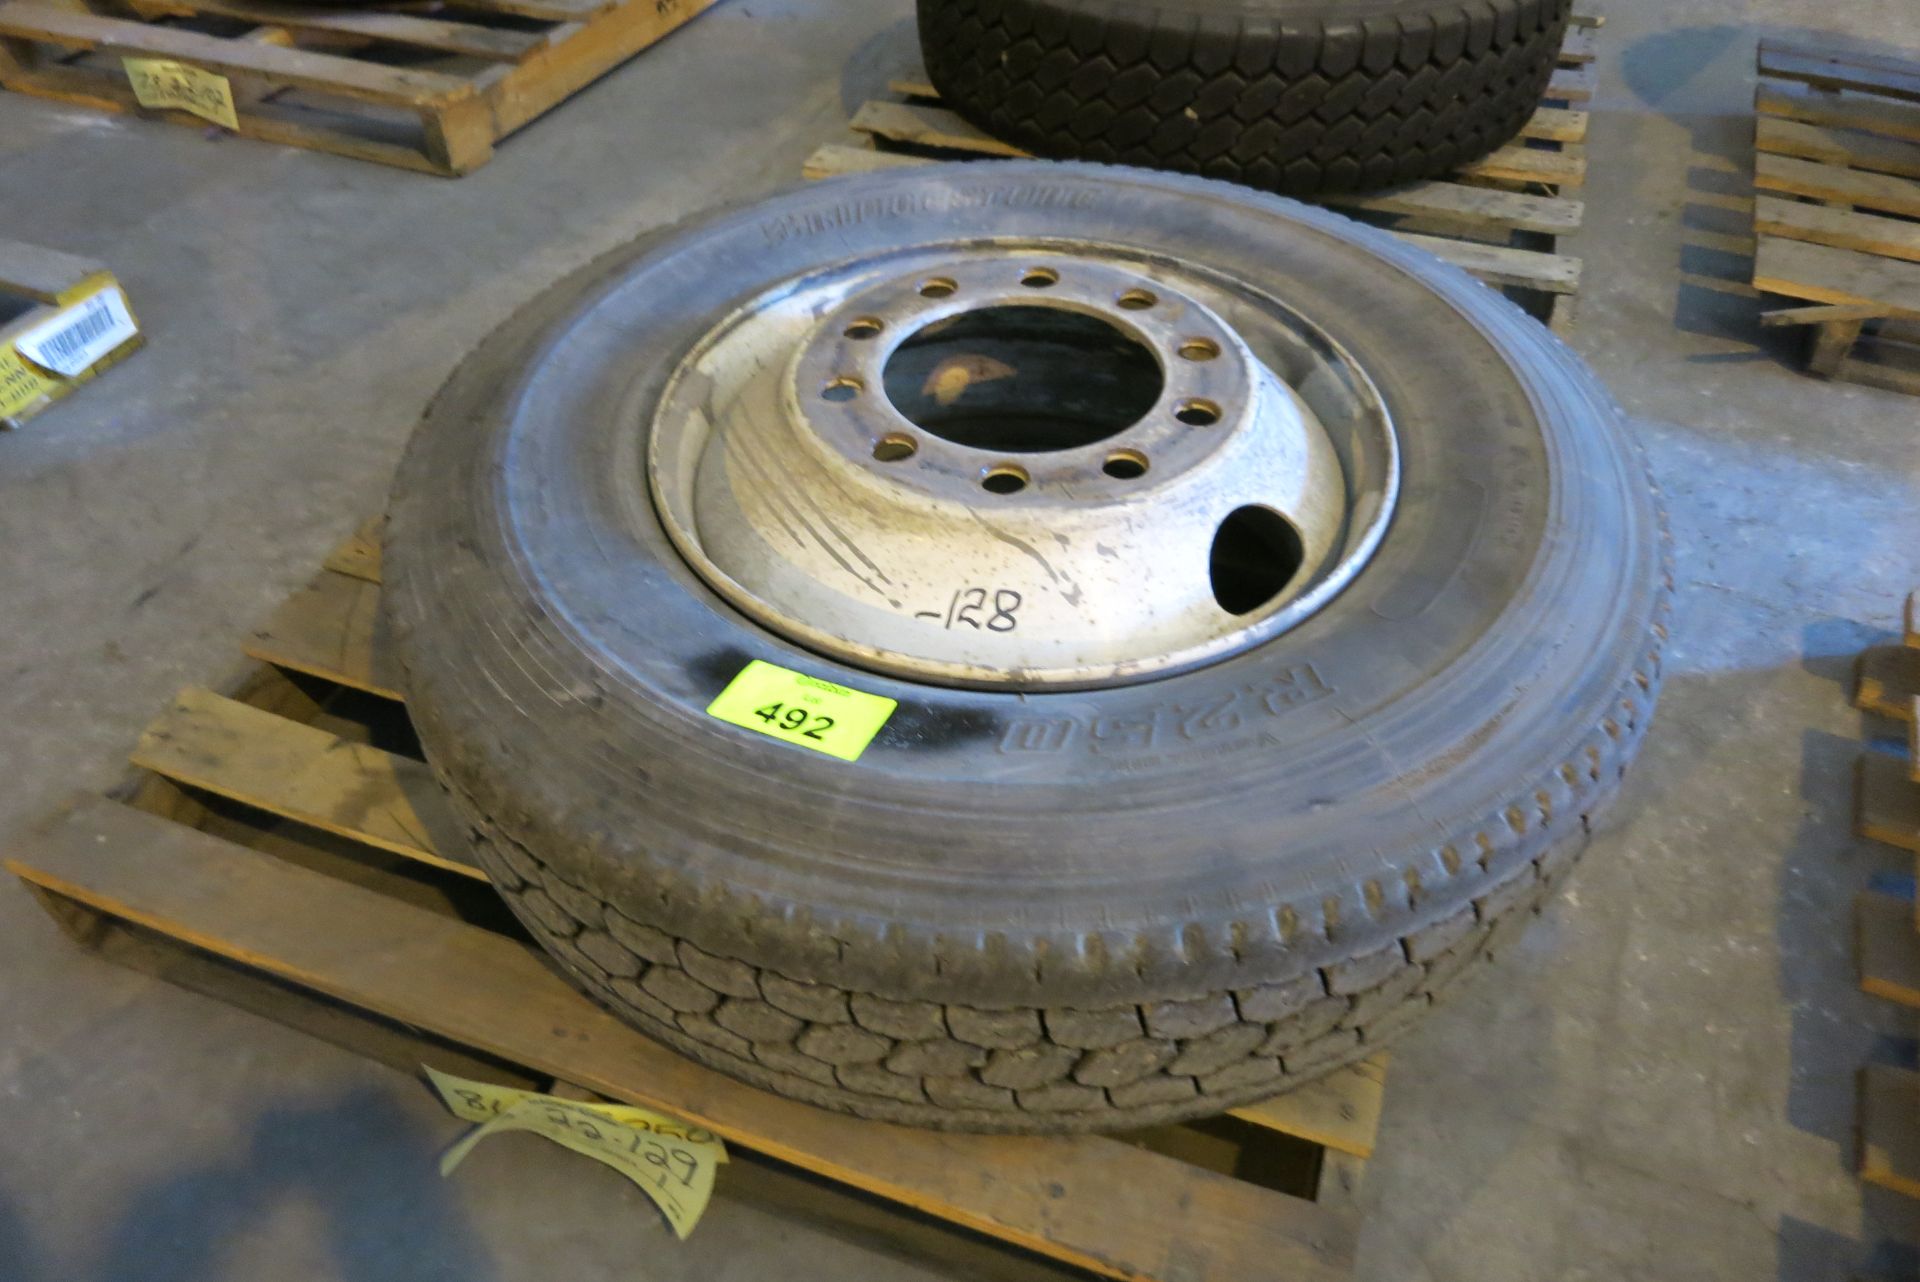 Bridgestone tire, 295/75R 22.5 with rim